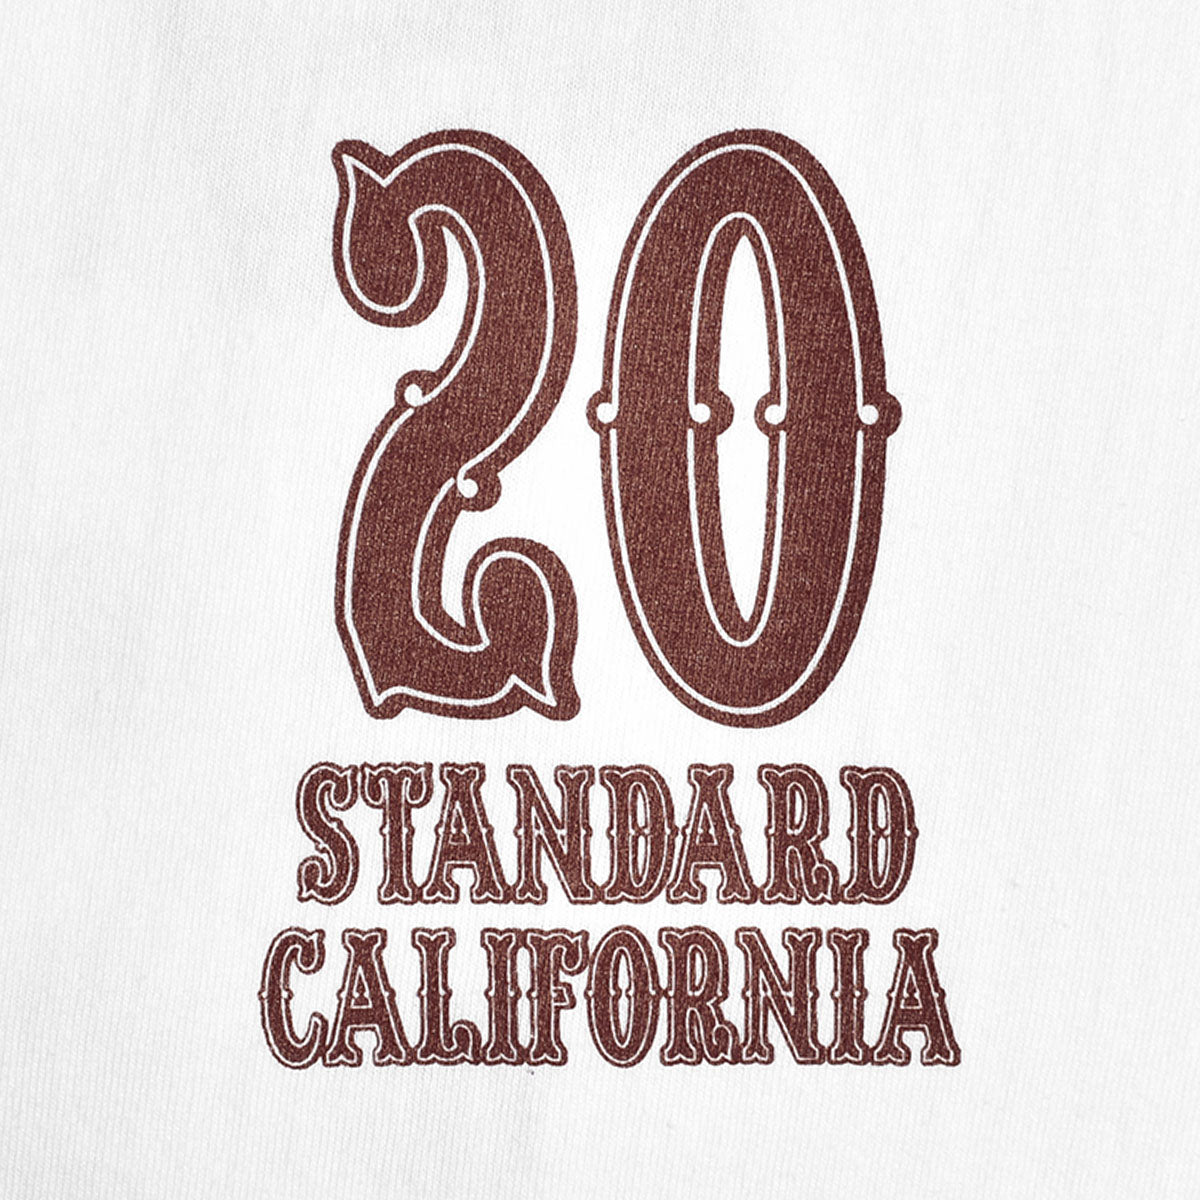 STANDARD CALIFORNIA]SD 20th Anniversary Logo T/WHITE(TSOSF100) – R&Co.